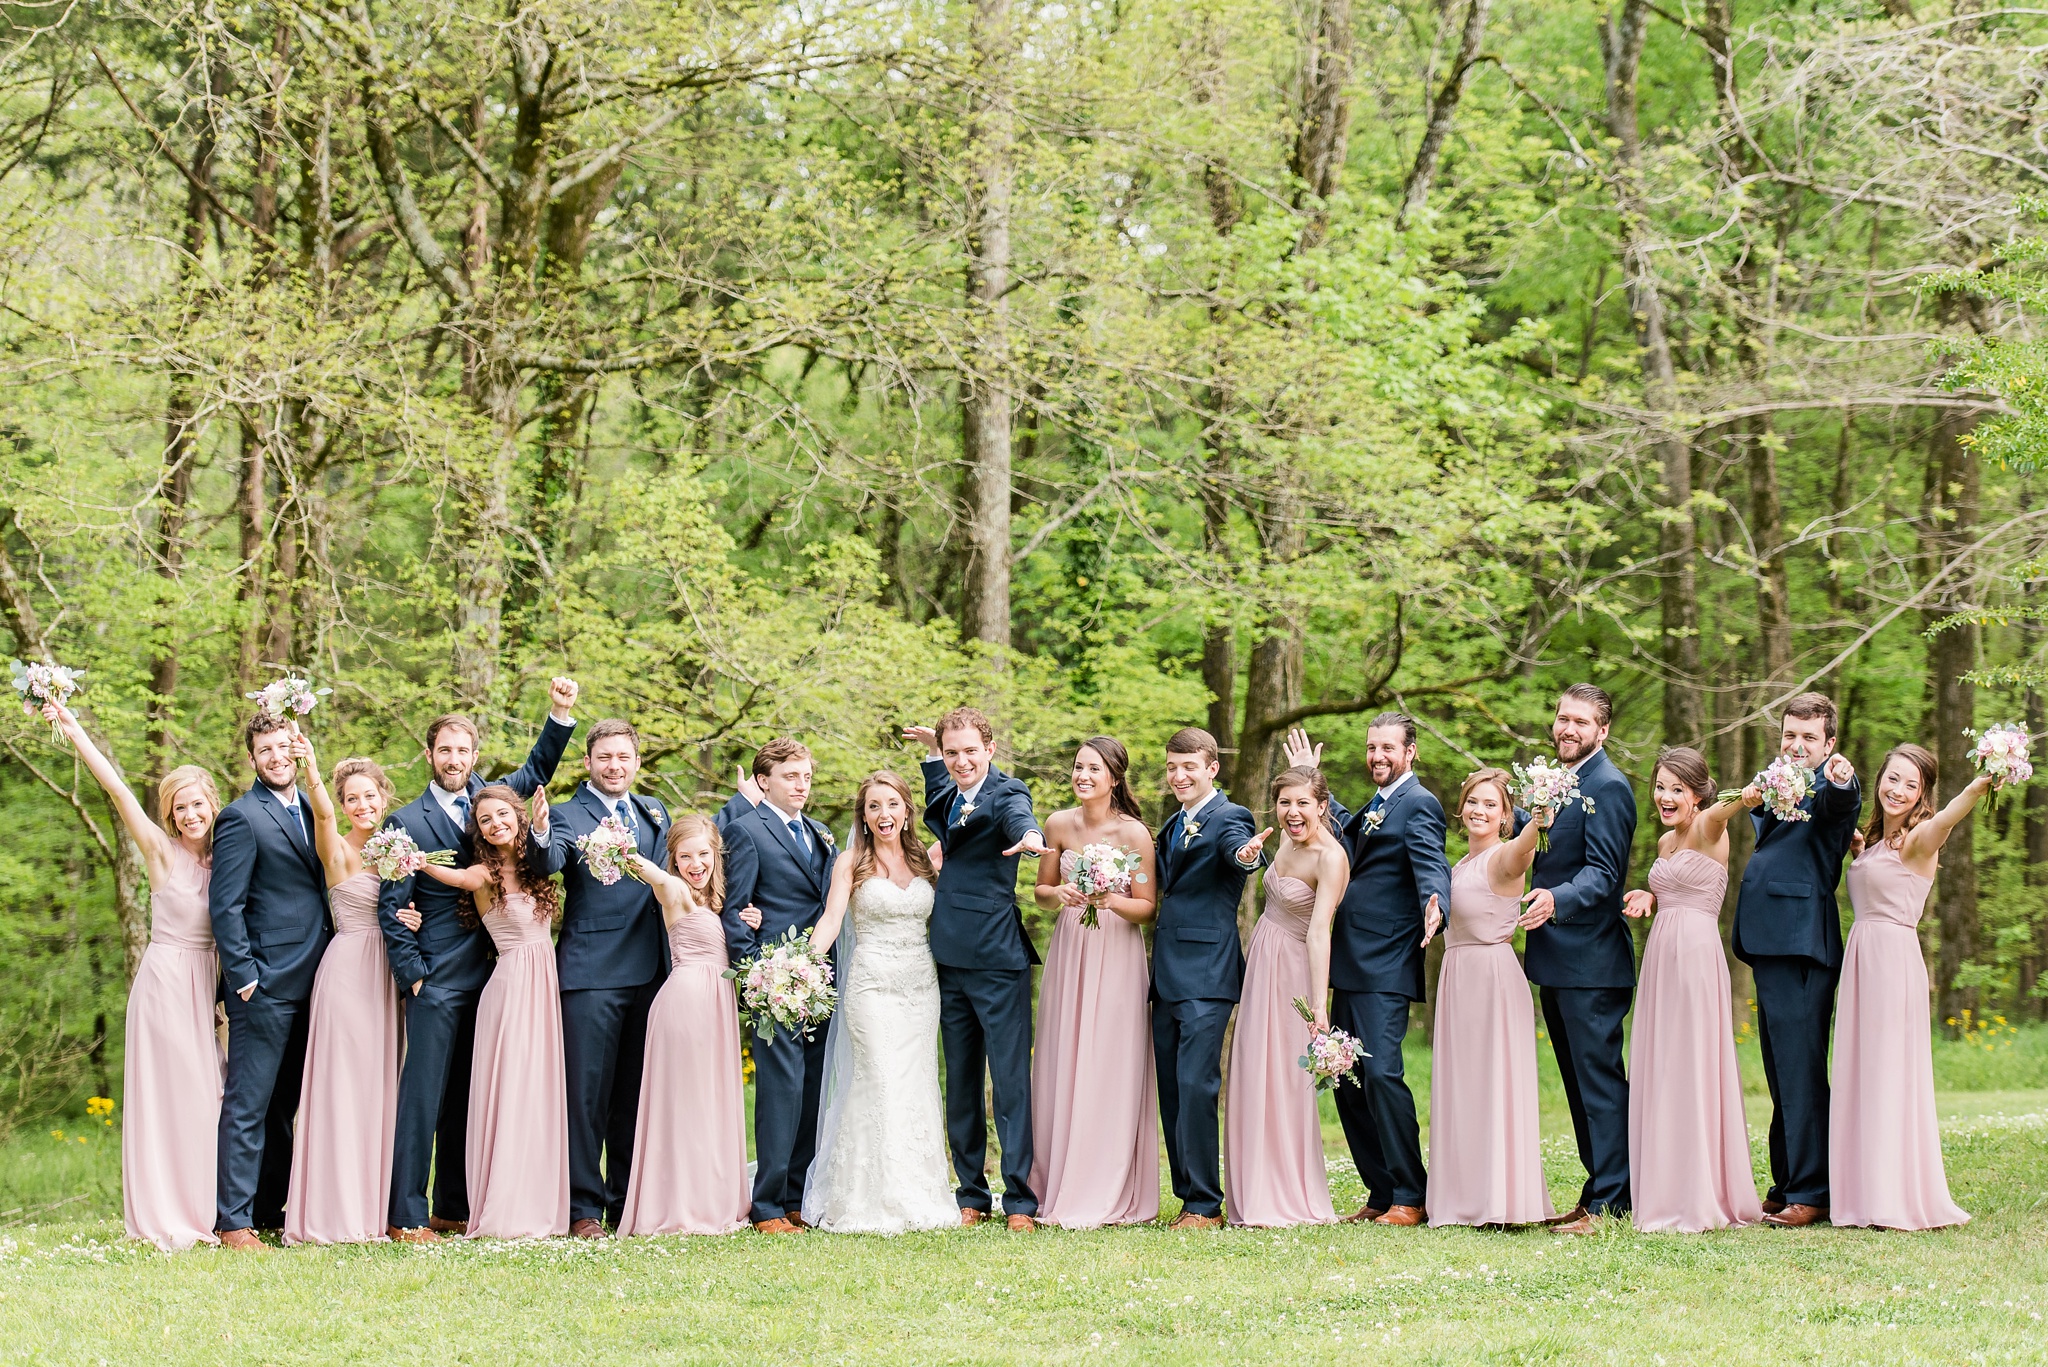 Sonnet House Blush and Gold Spring Wedding | Birmingham Alabama Wedding Photographers_0050.jpg